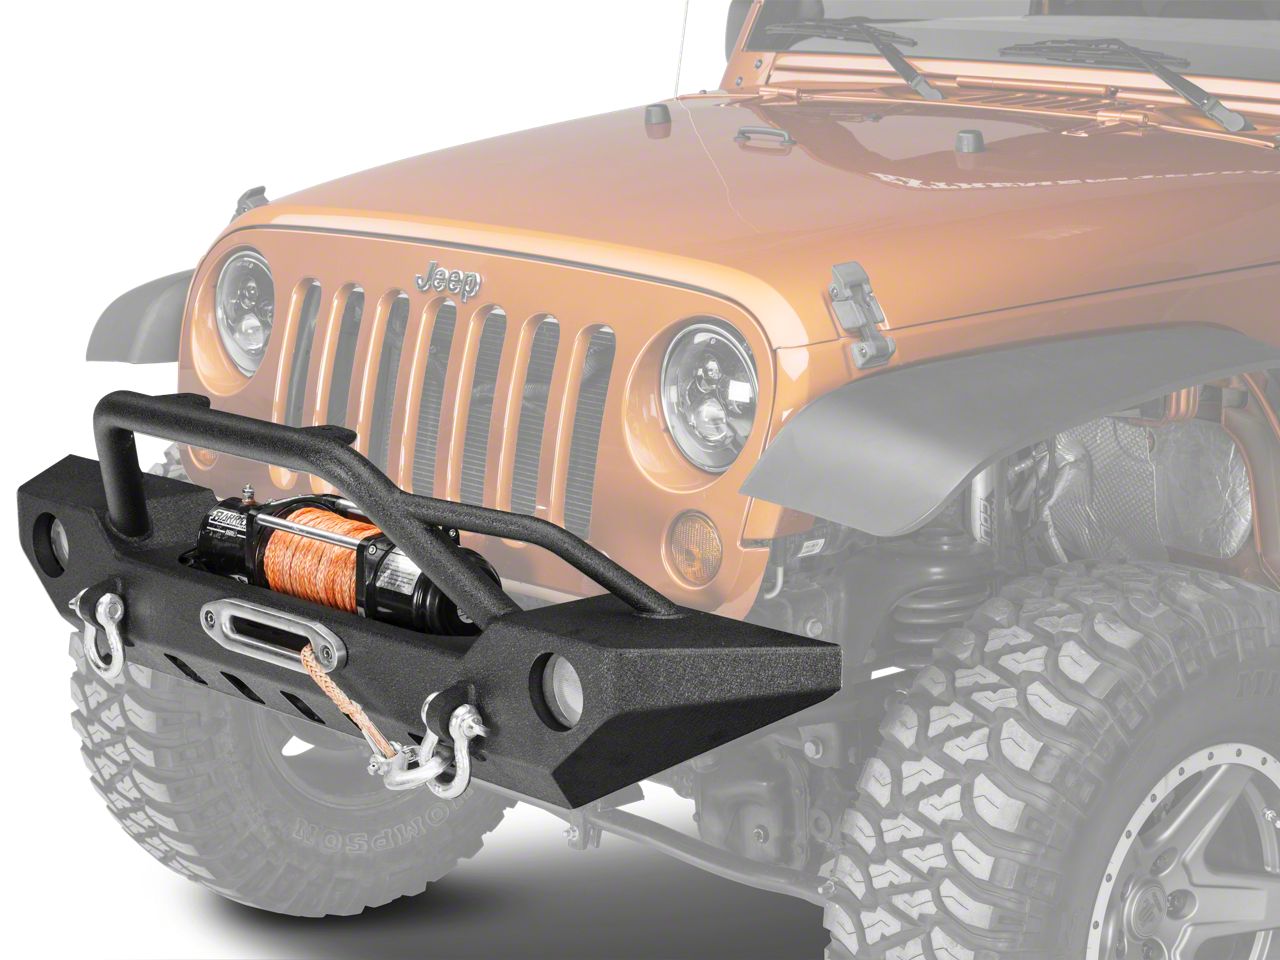 2007 Jeep Wrangler JK Accessories & Parts | ExtremeTerrain